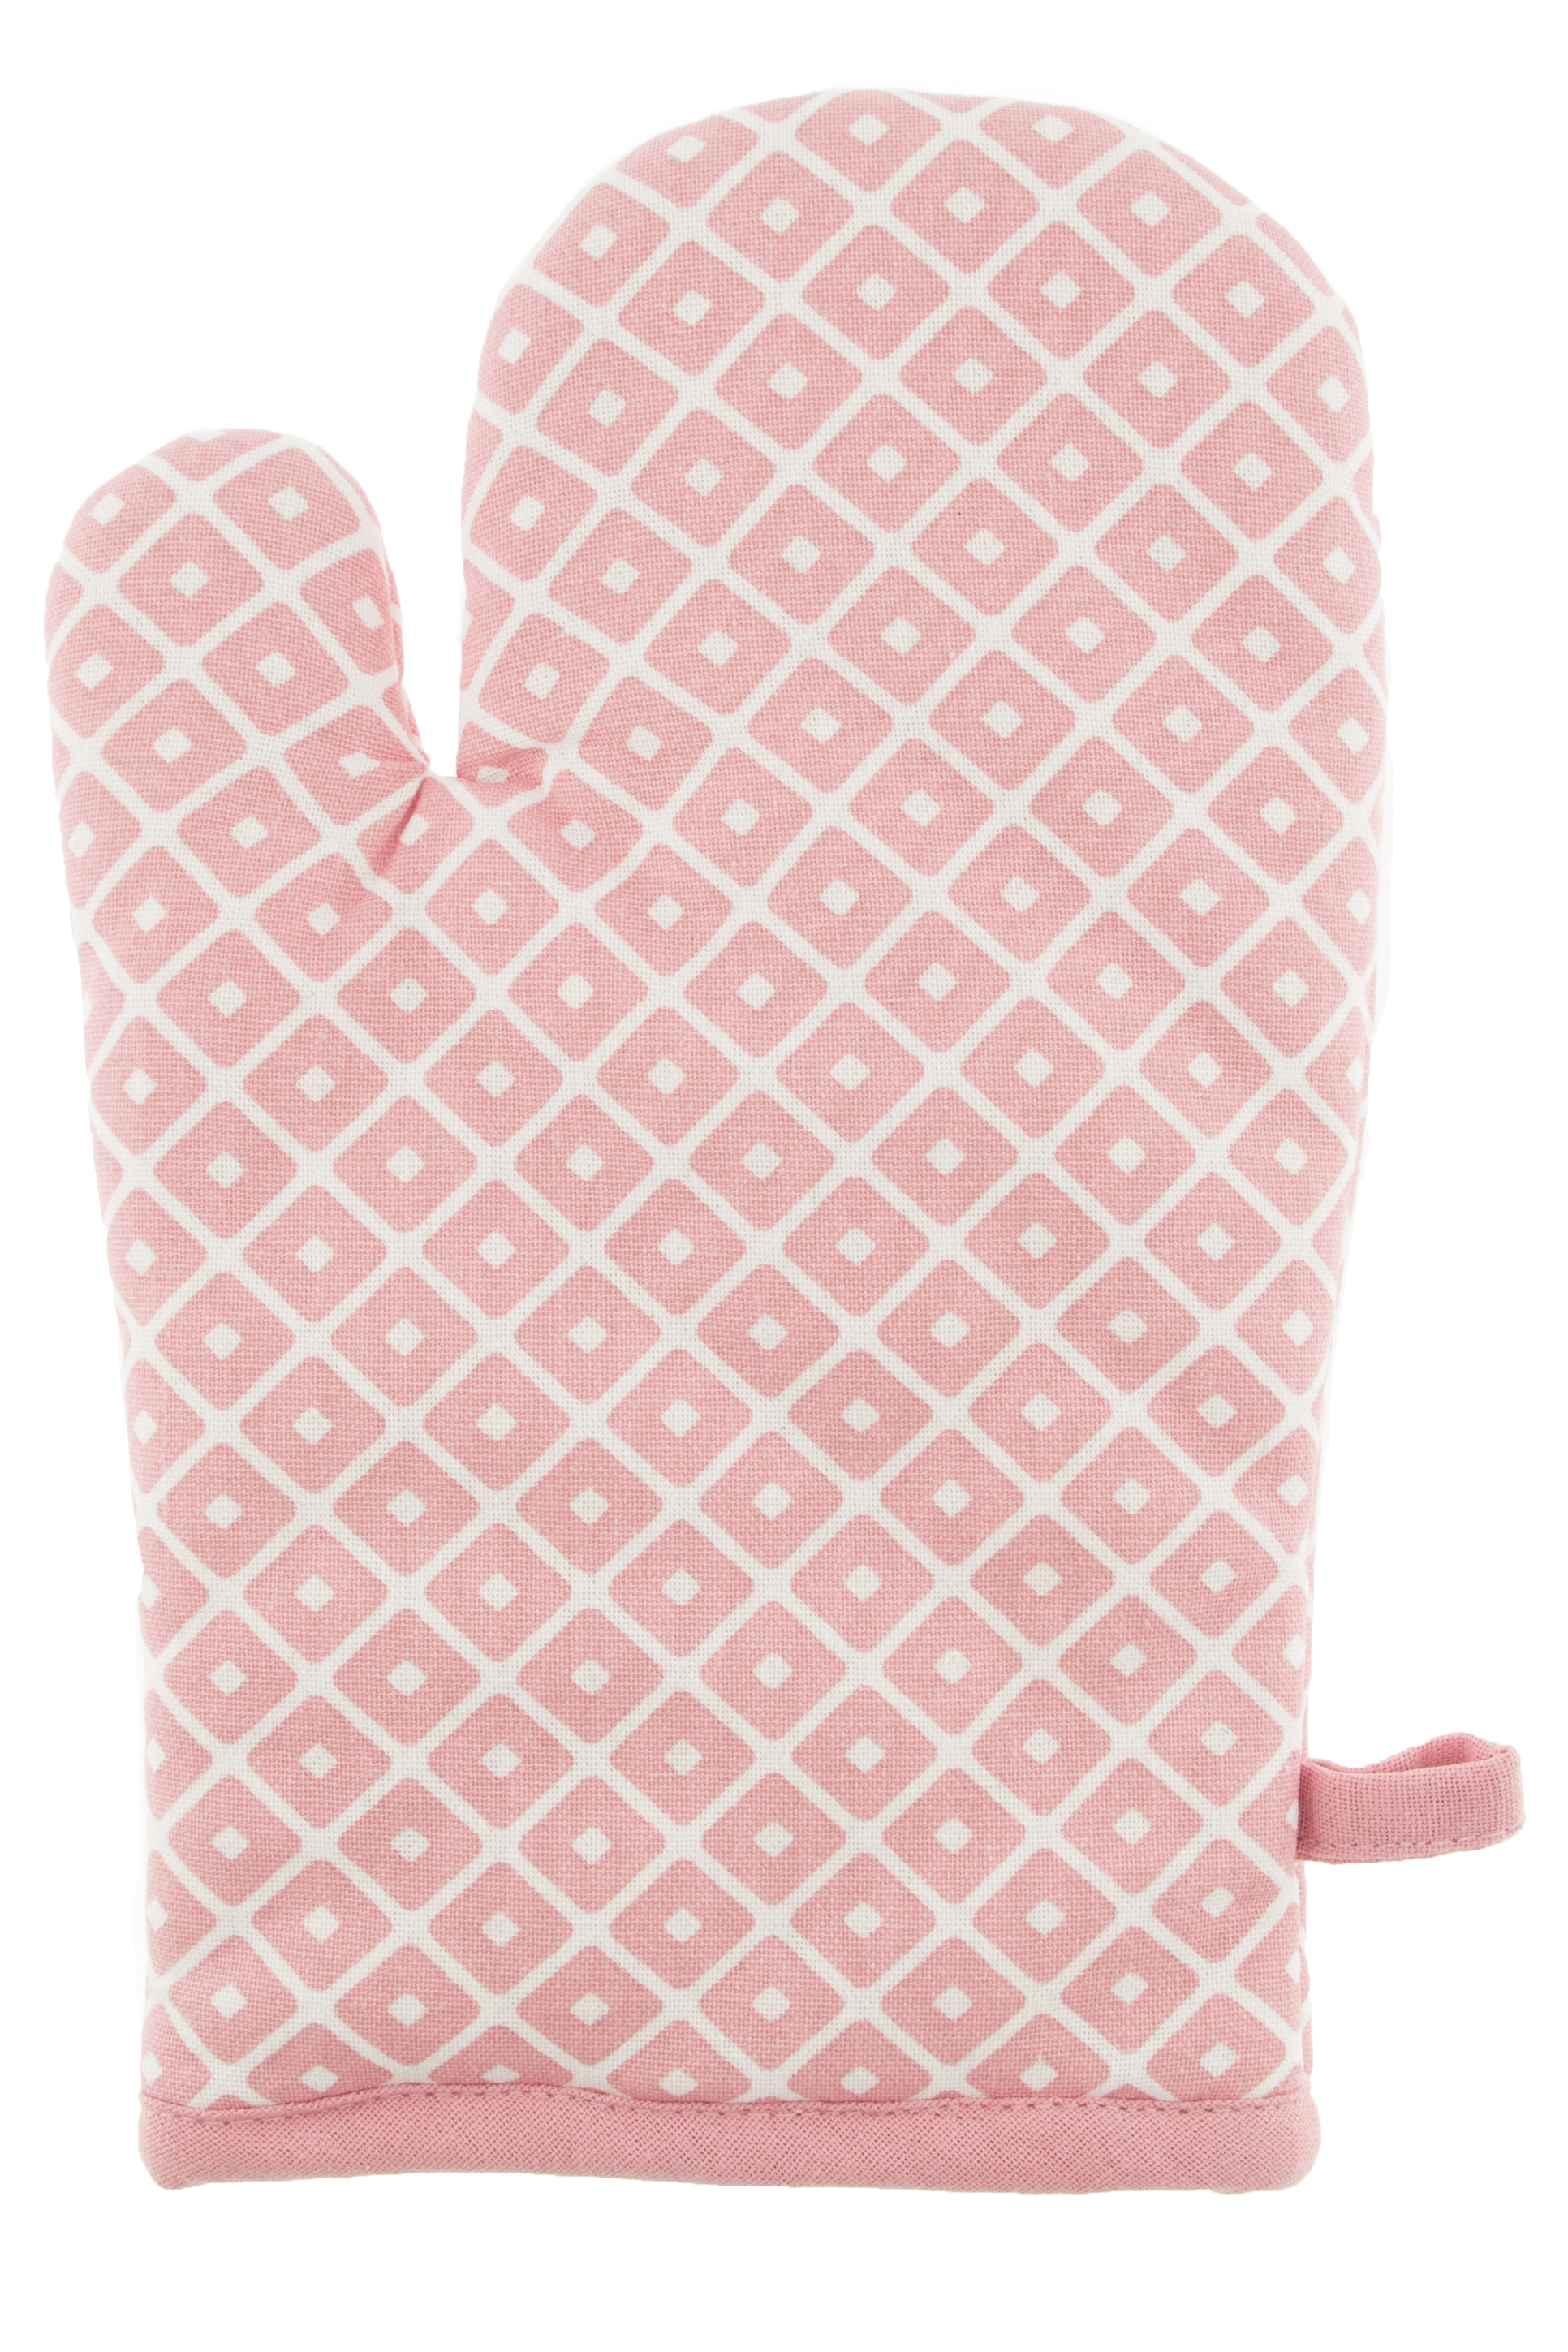 Gant geo dot 18x28 sur cintre, soft pink